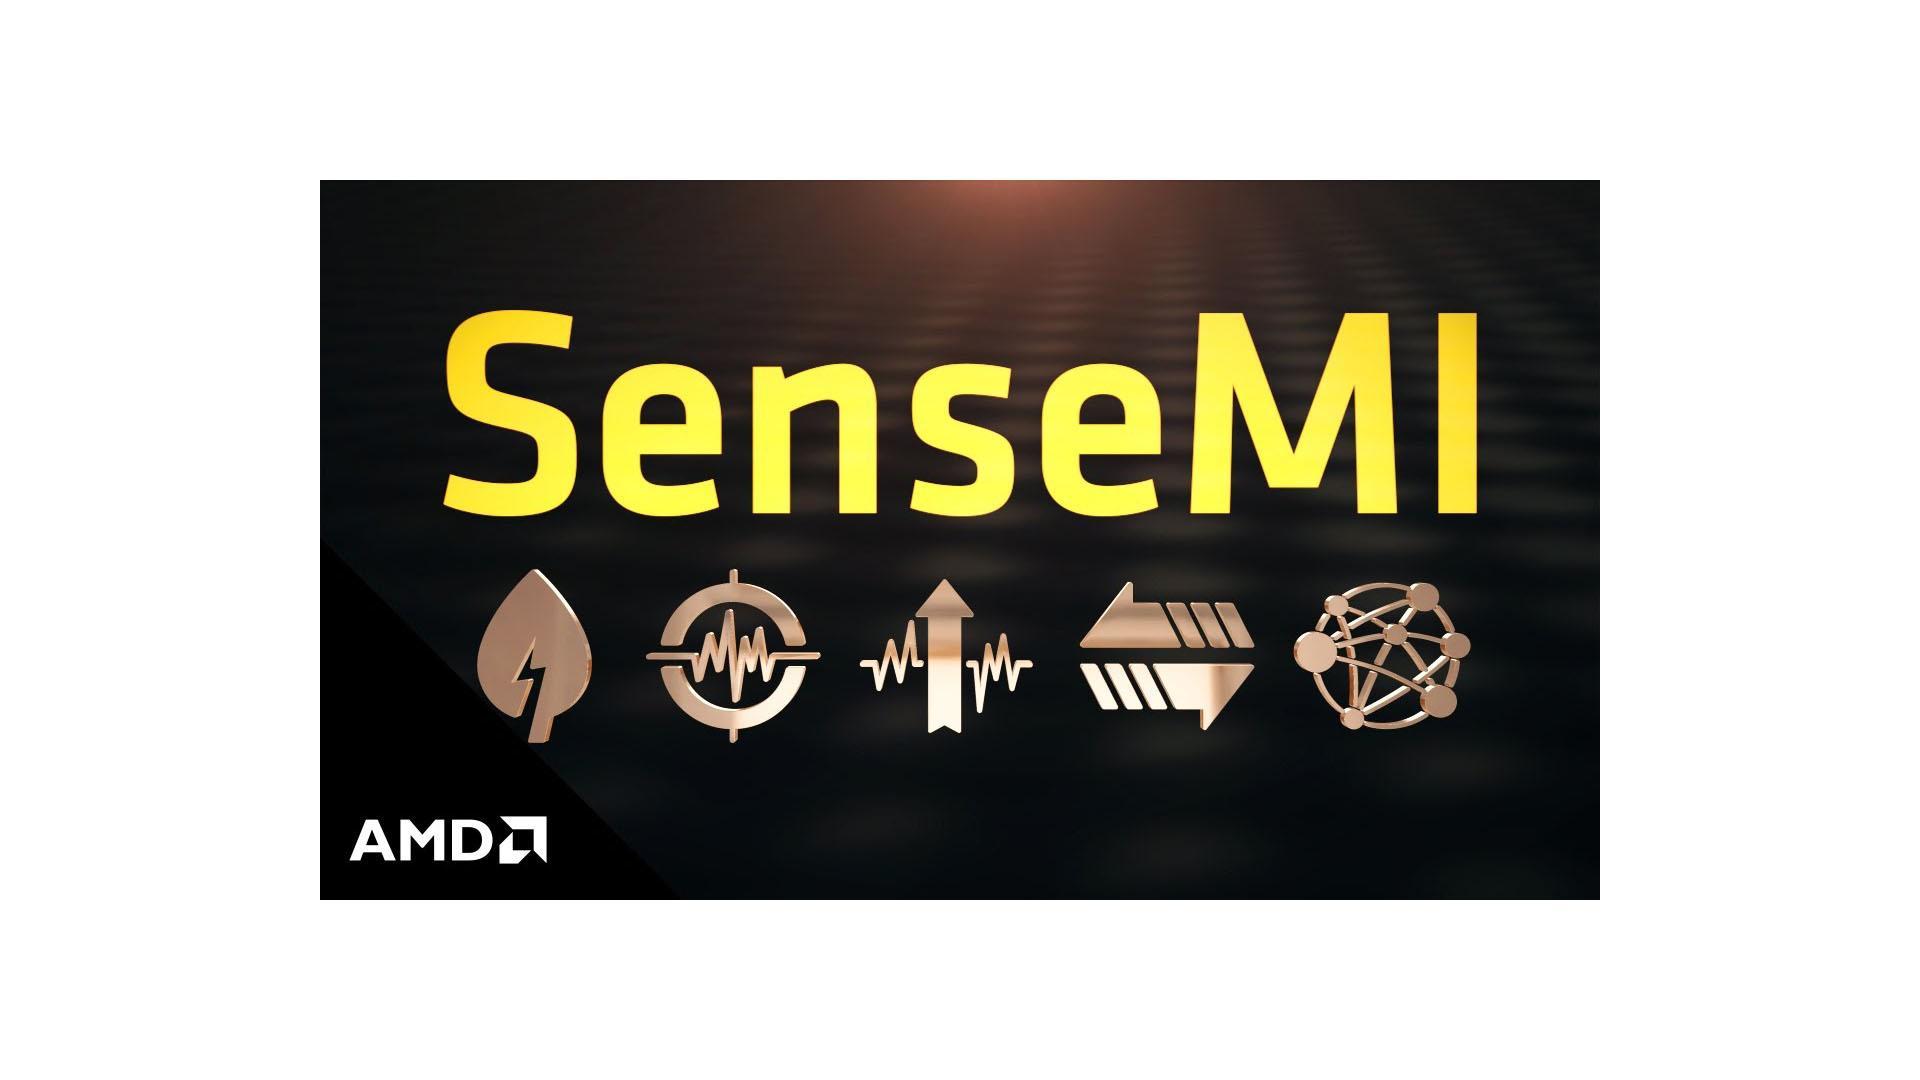 A tecnologia SenseMI da AMD realmente aumenta o desempenho?